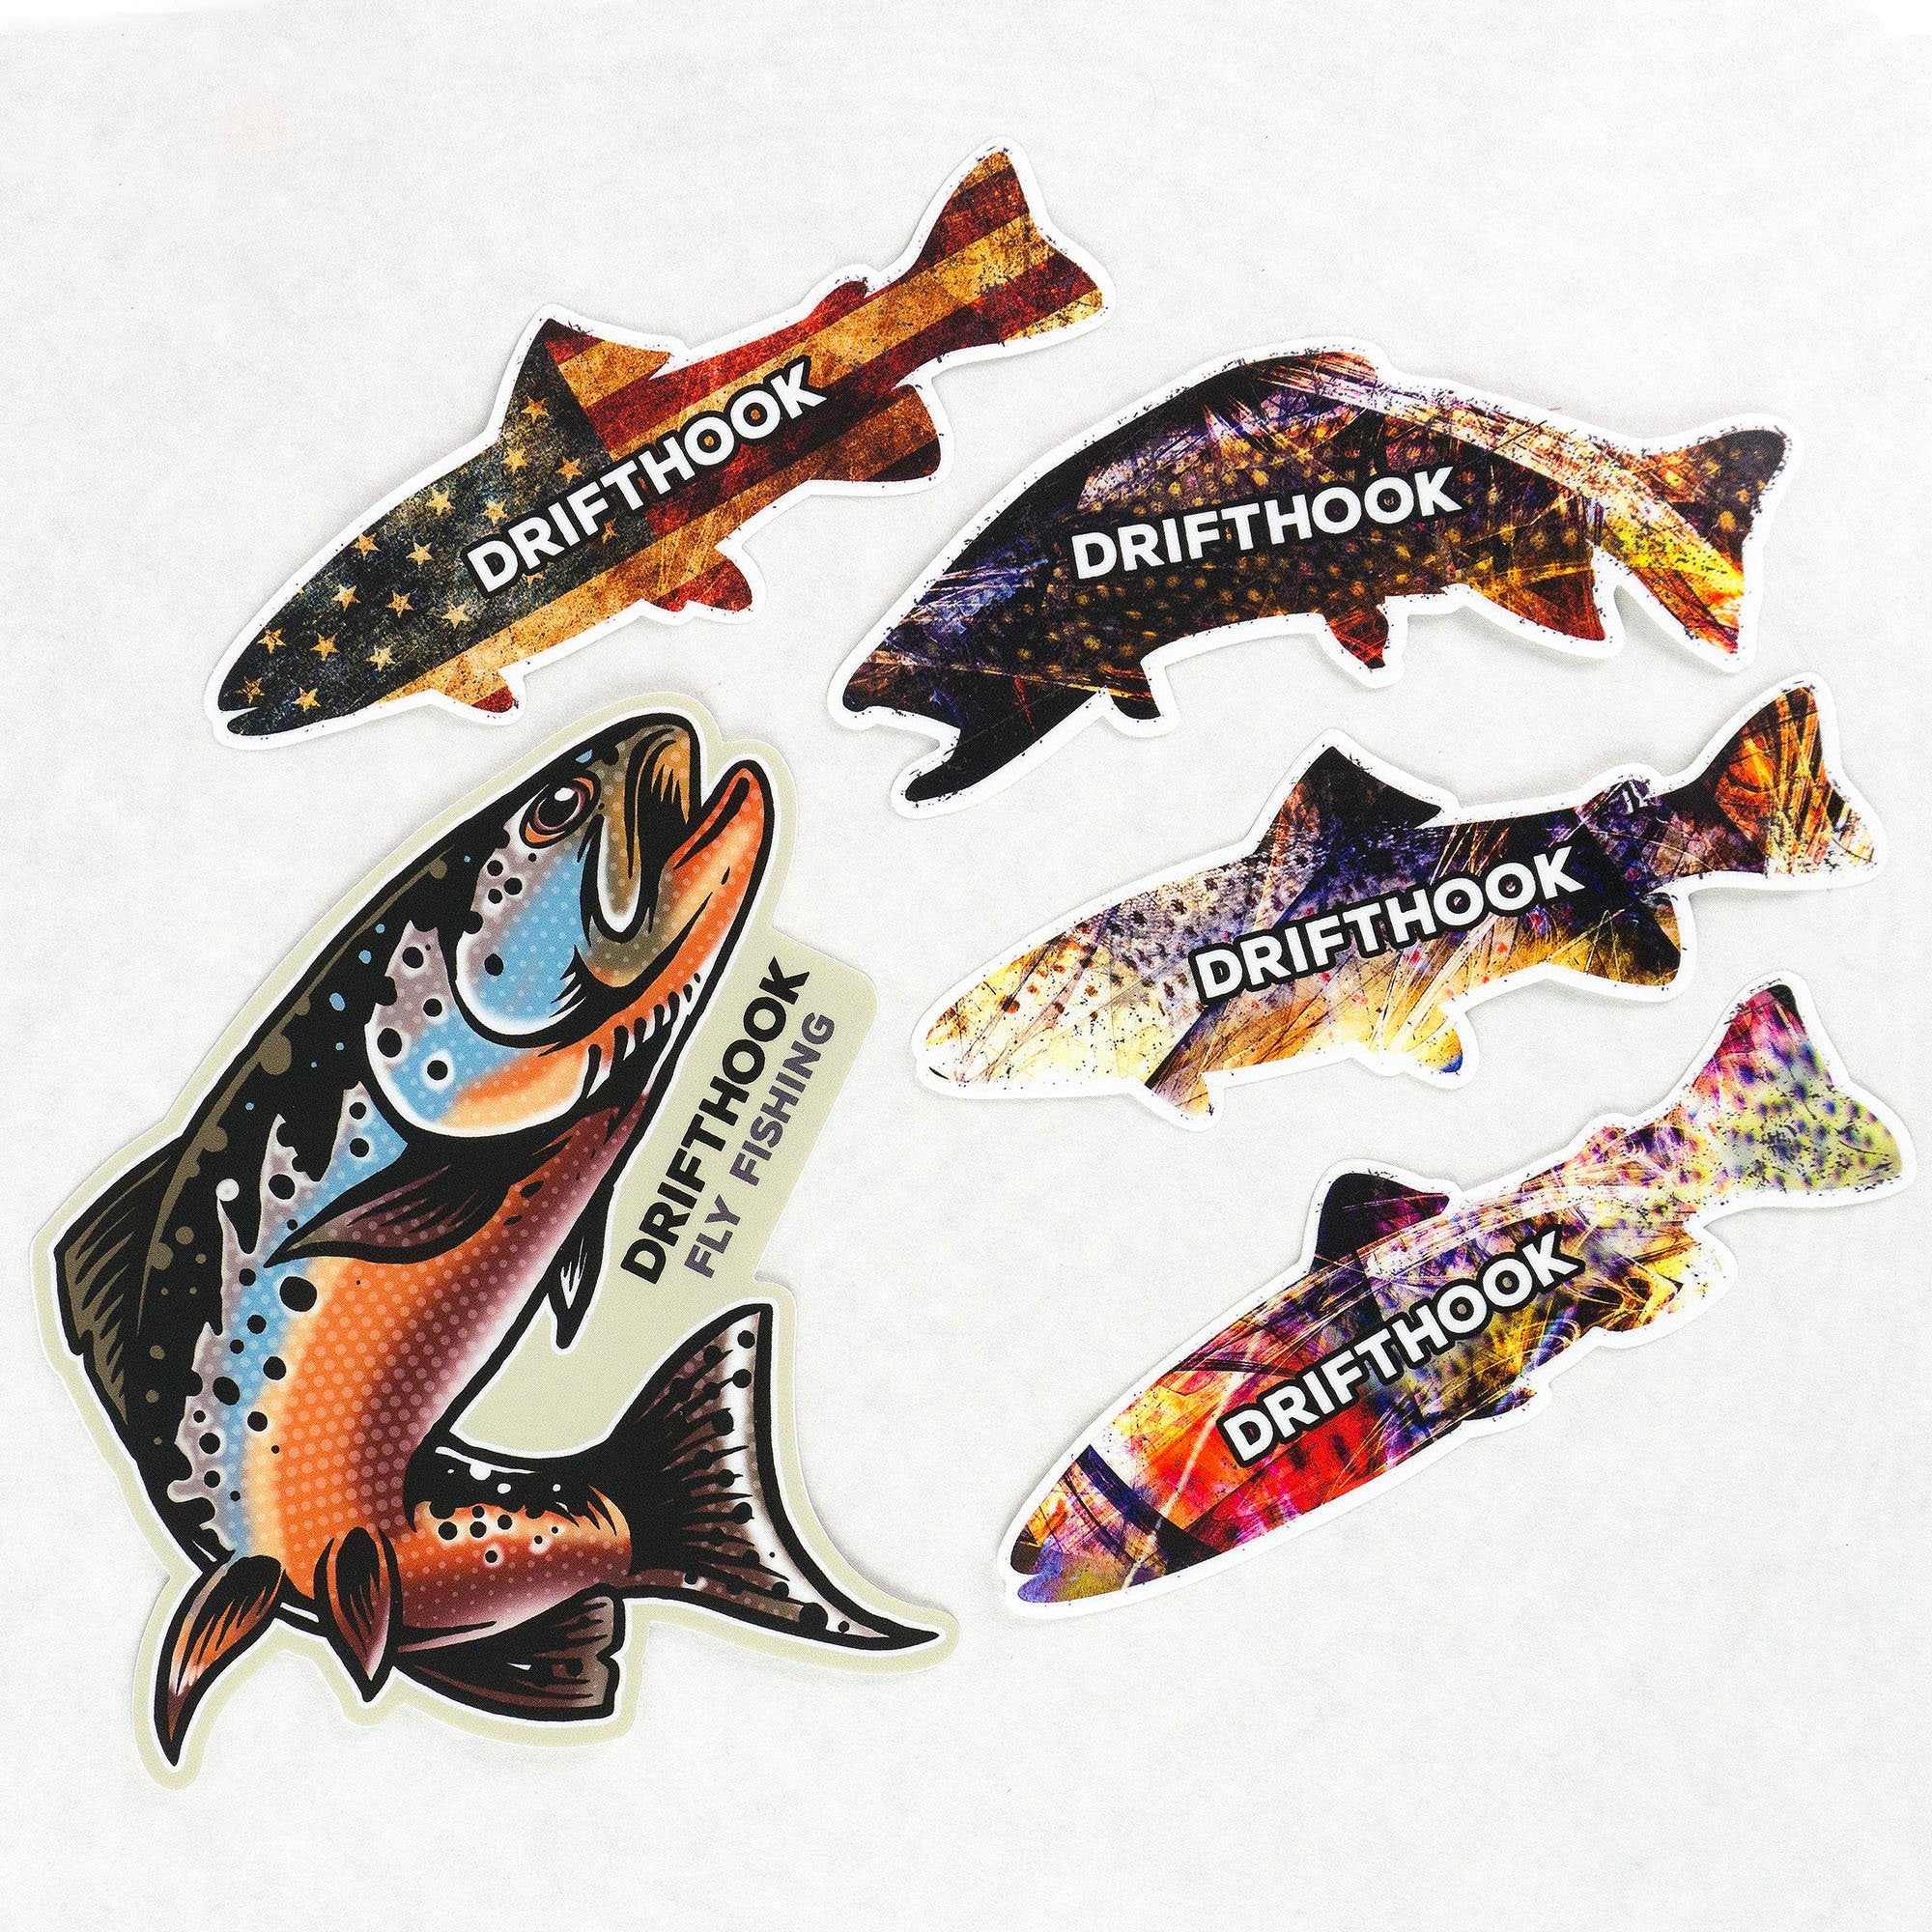 Fly Fishing Sticker - USA